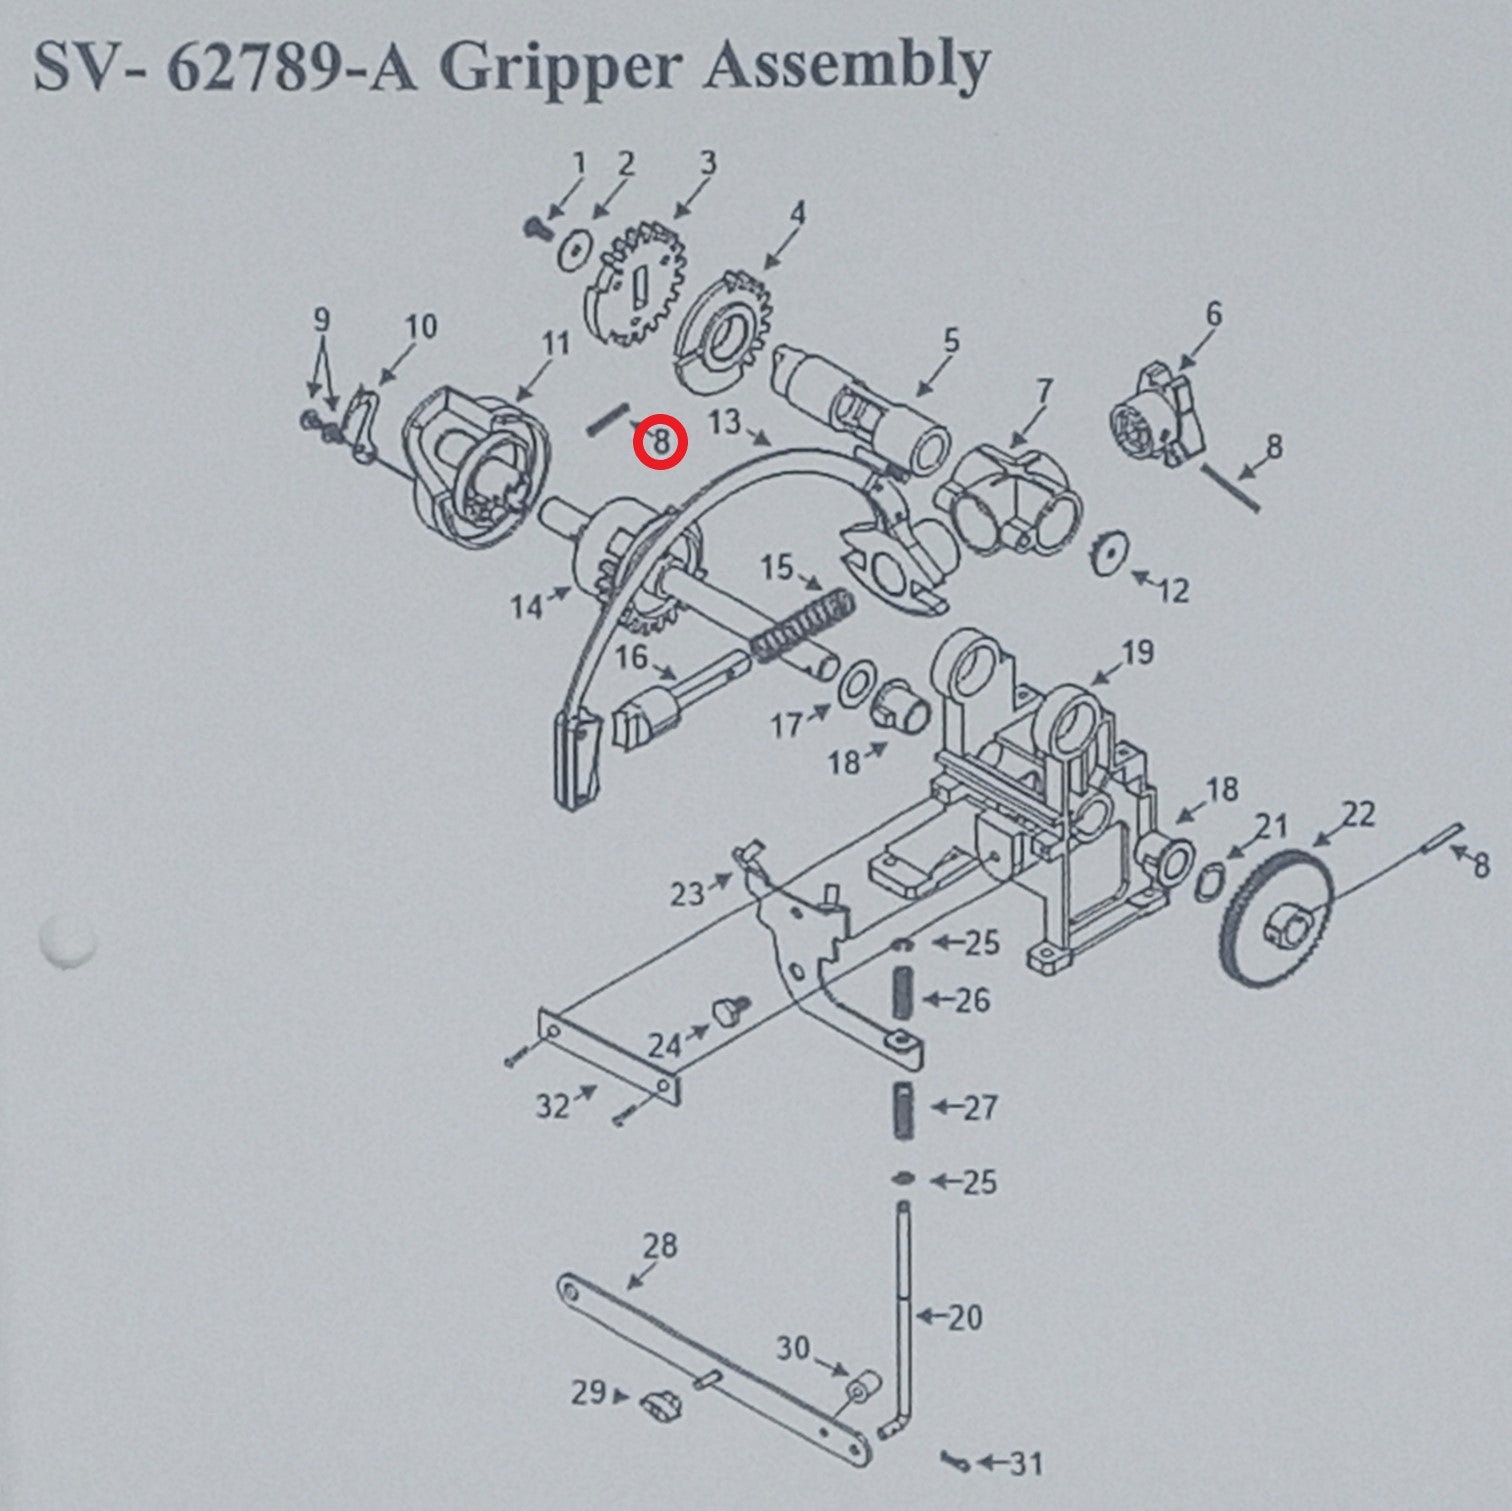 1/8 x 15/16 Spirol Pin (ST-00534)